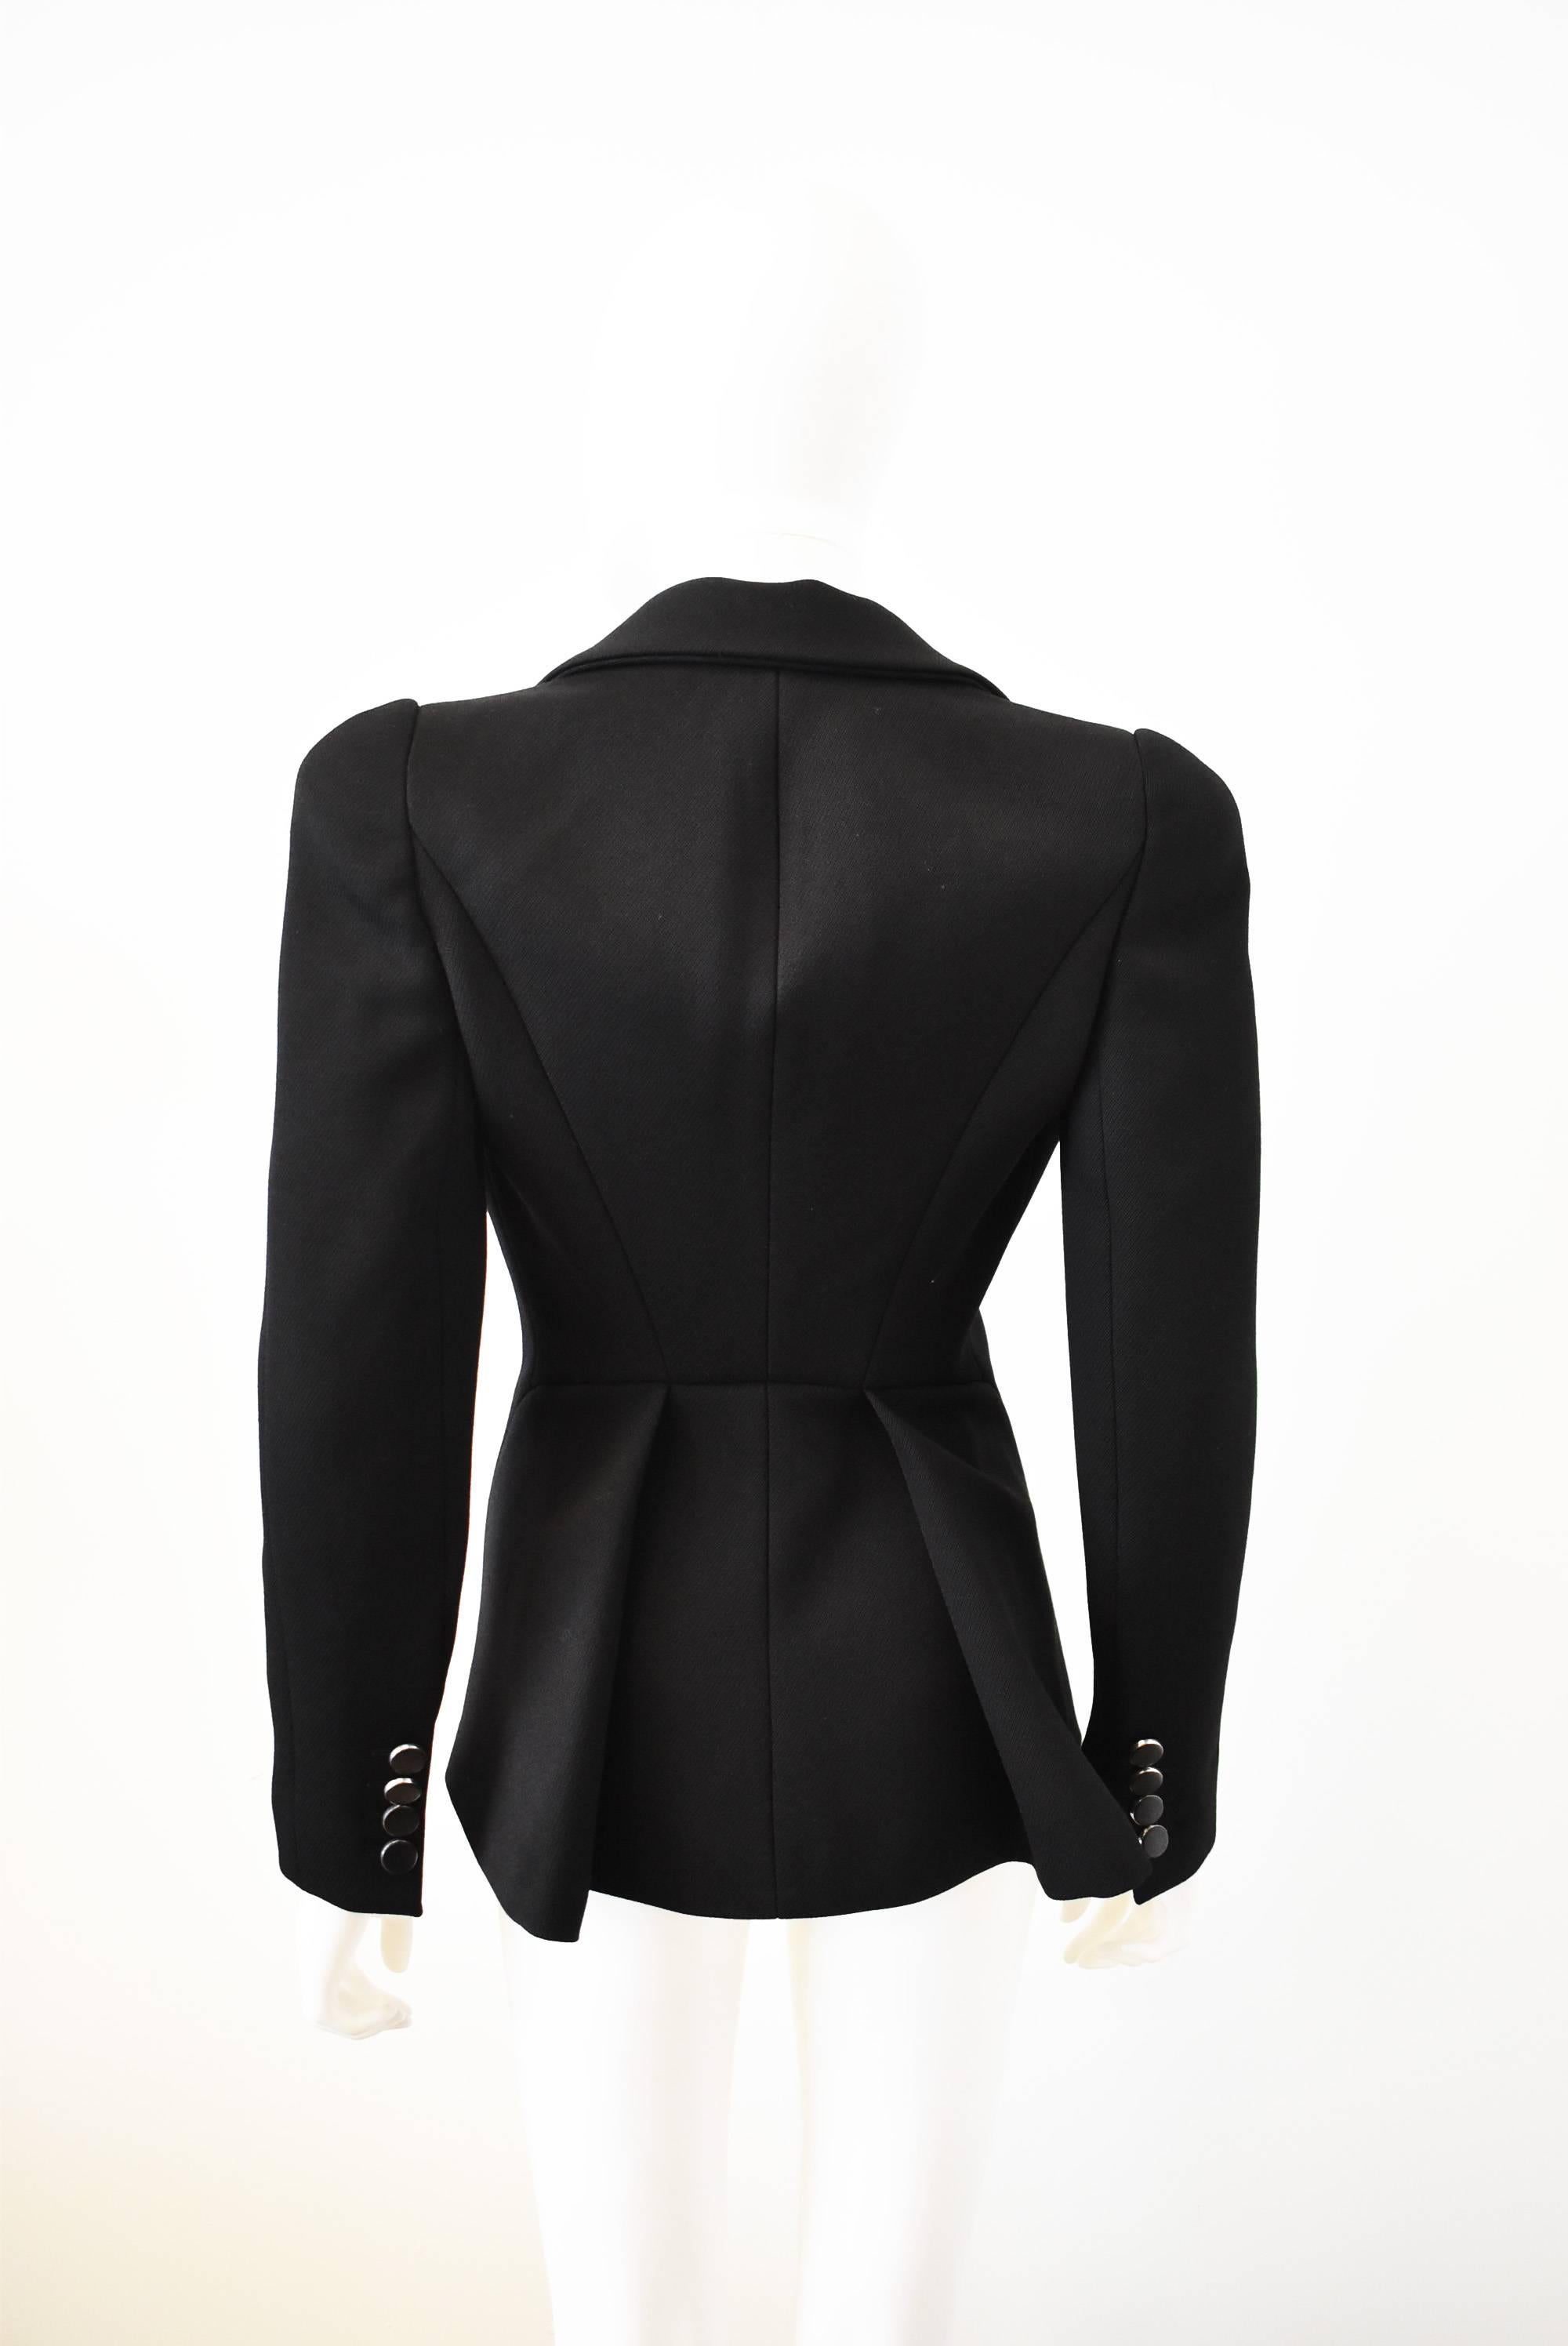 Women's Alexander McQueen Black Fitted Jacket with ‘Cufflink’ Metal Fastening For Sale